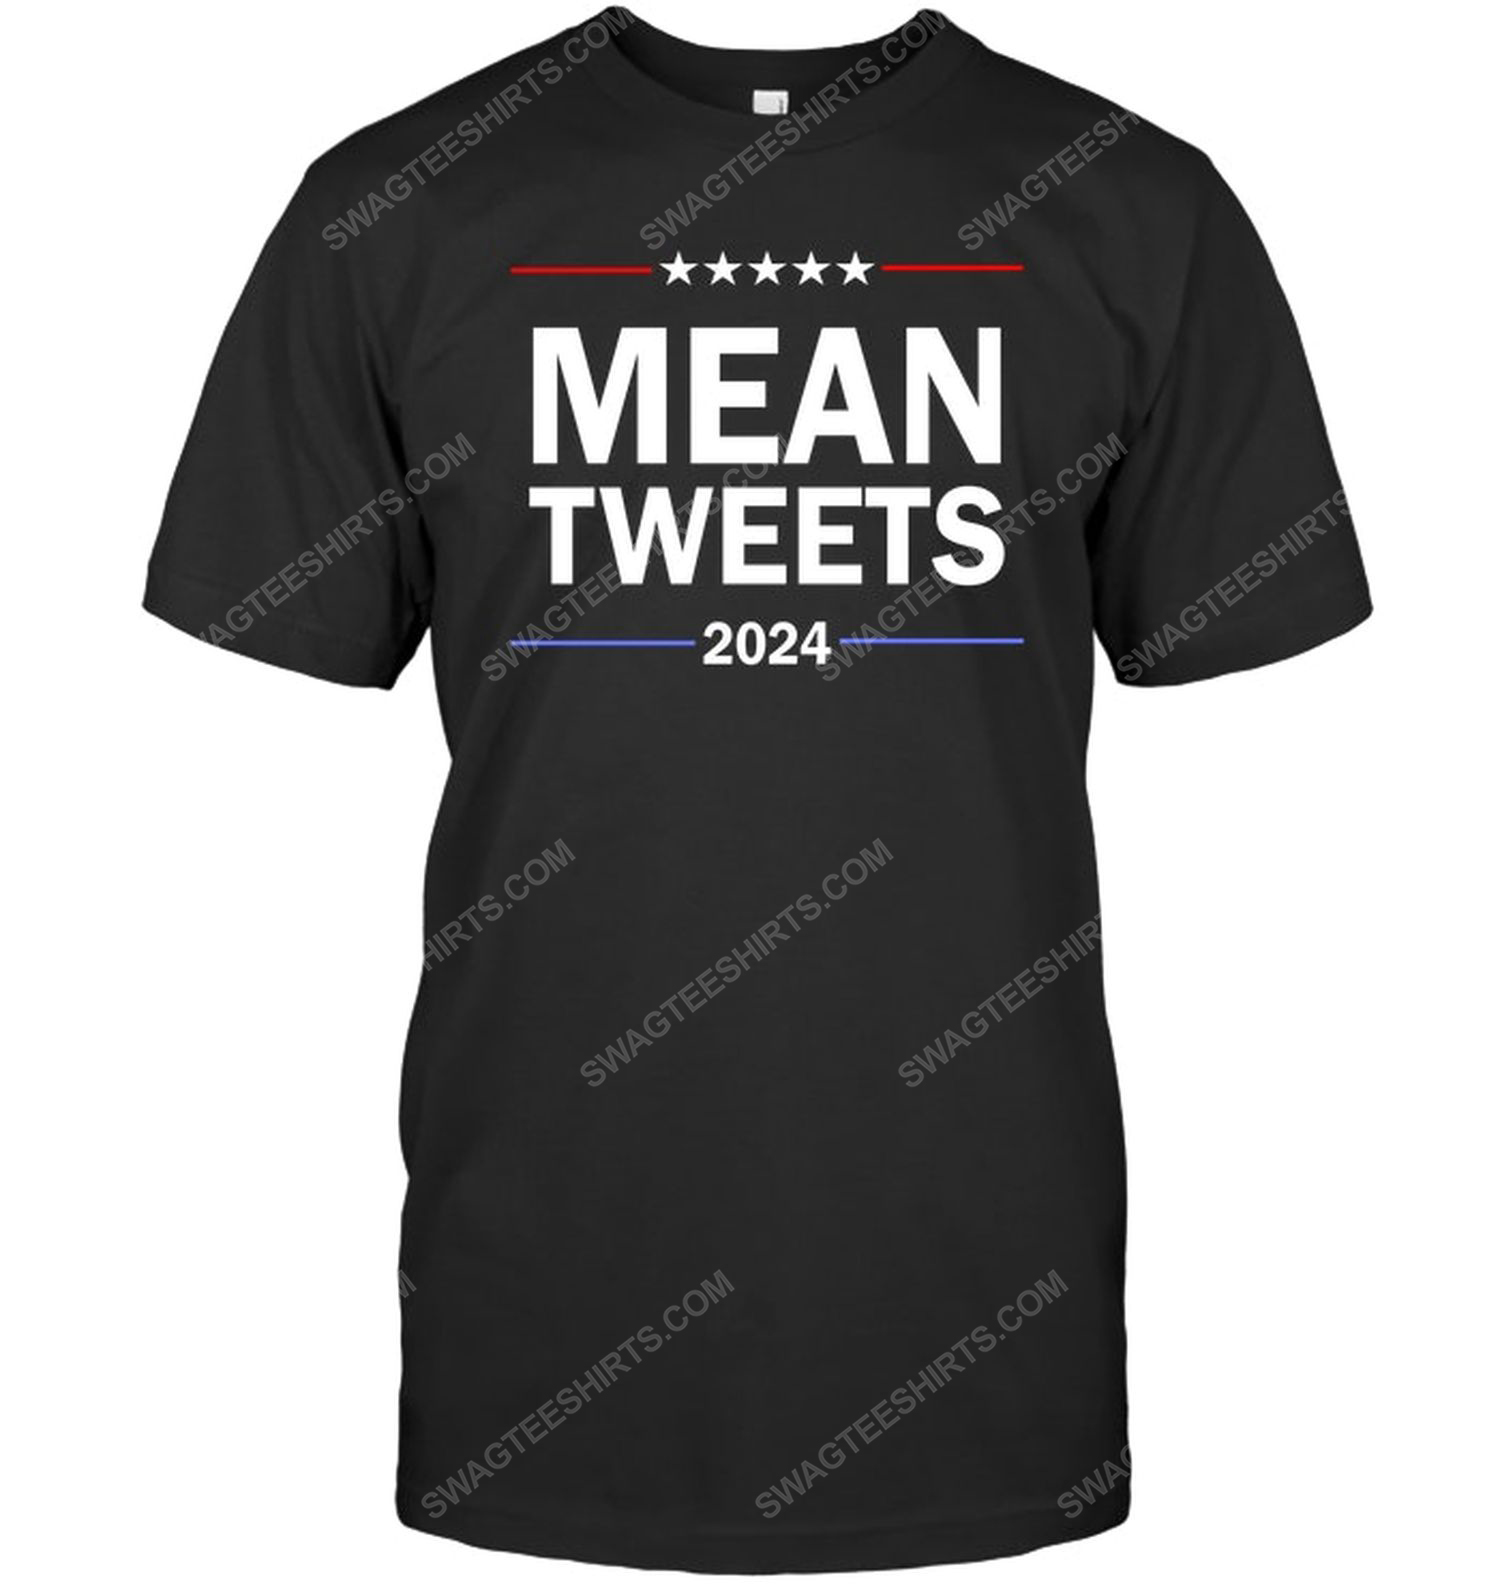 Mean tweets 2024 american flag political tshirt